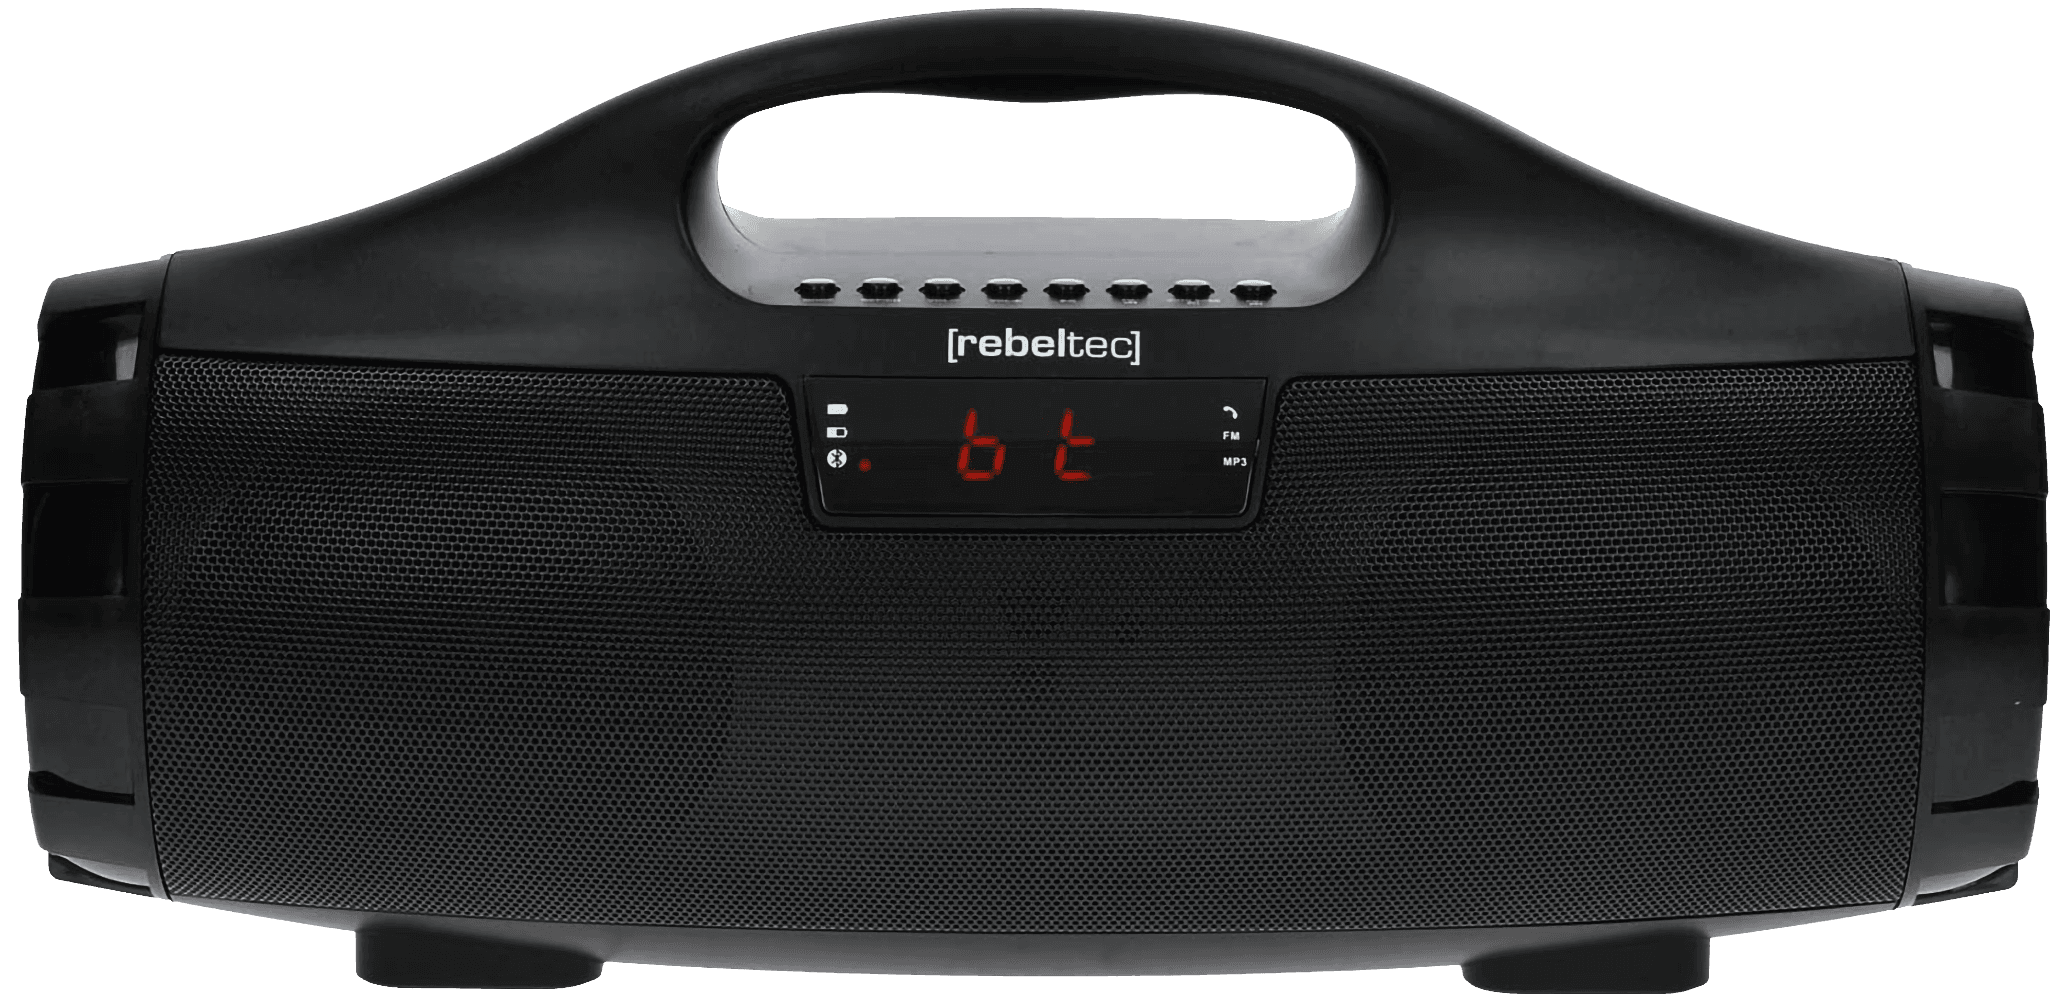 Motorola Moto G71 bluetooth hangszóró Rebeltec Soundbox 390